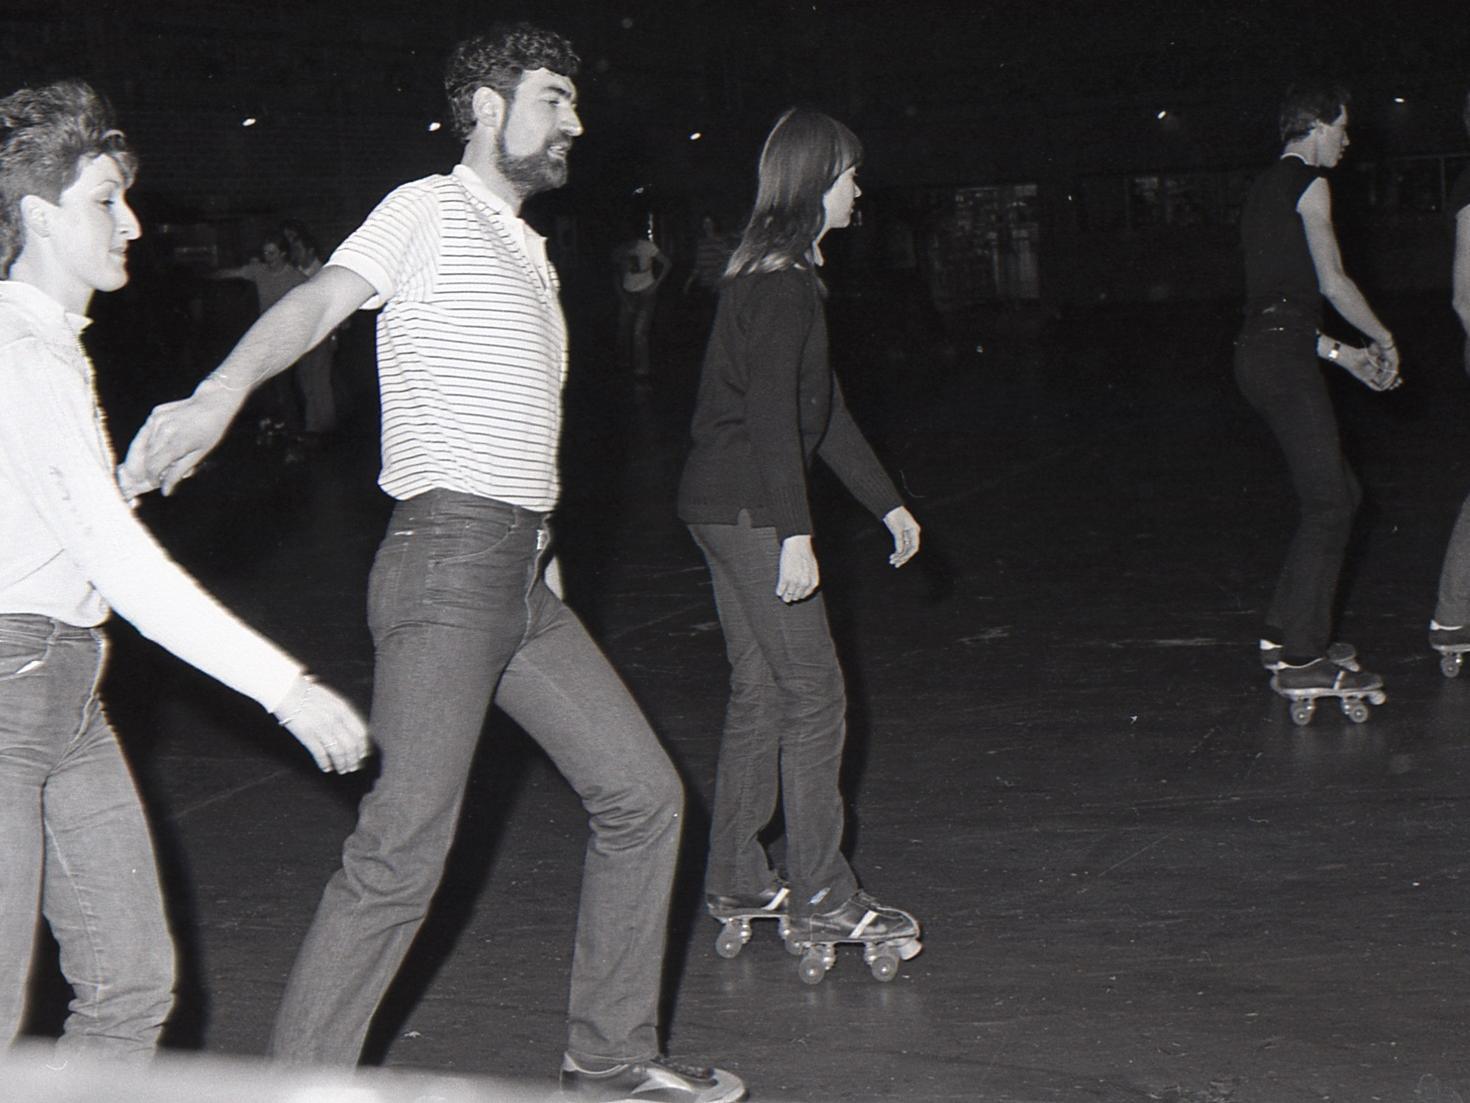 Group skate. Photo: Living Archive MK